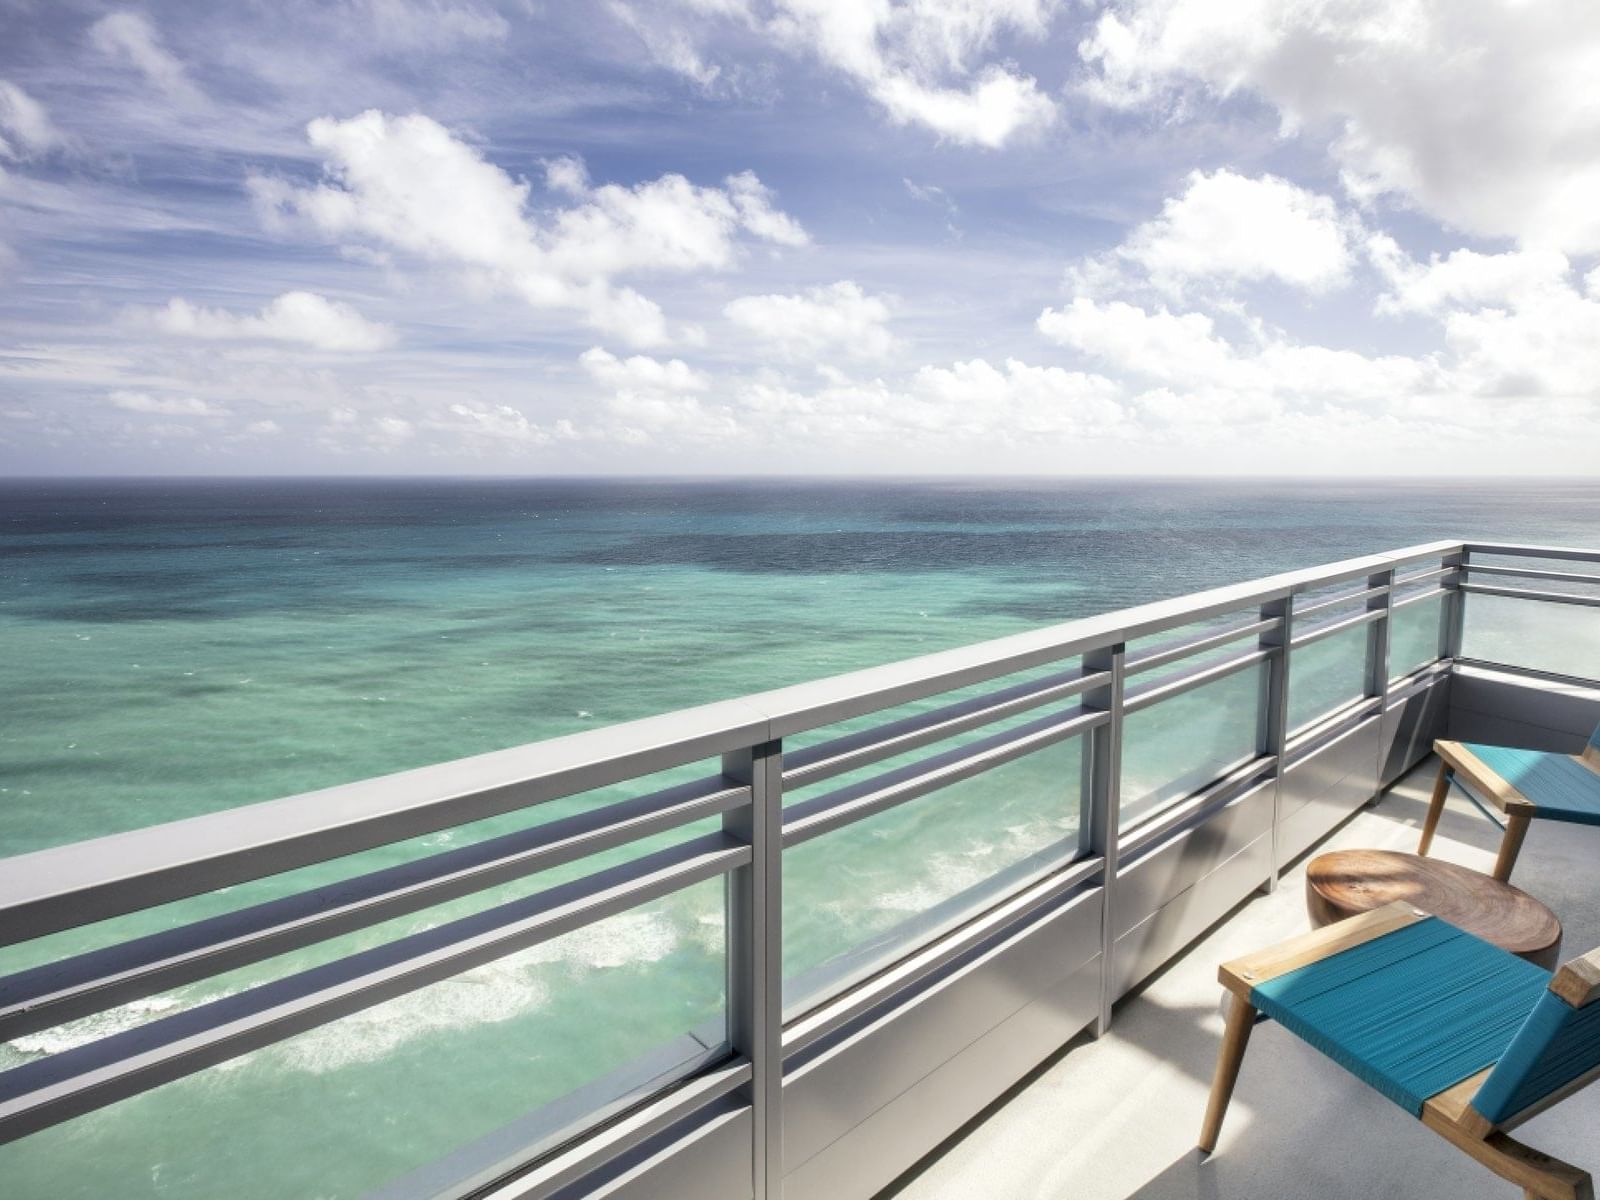 Balcony of the Partial Ocean View suite at Diplomat Resort